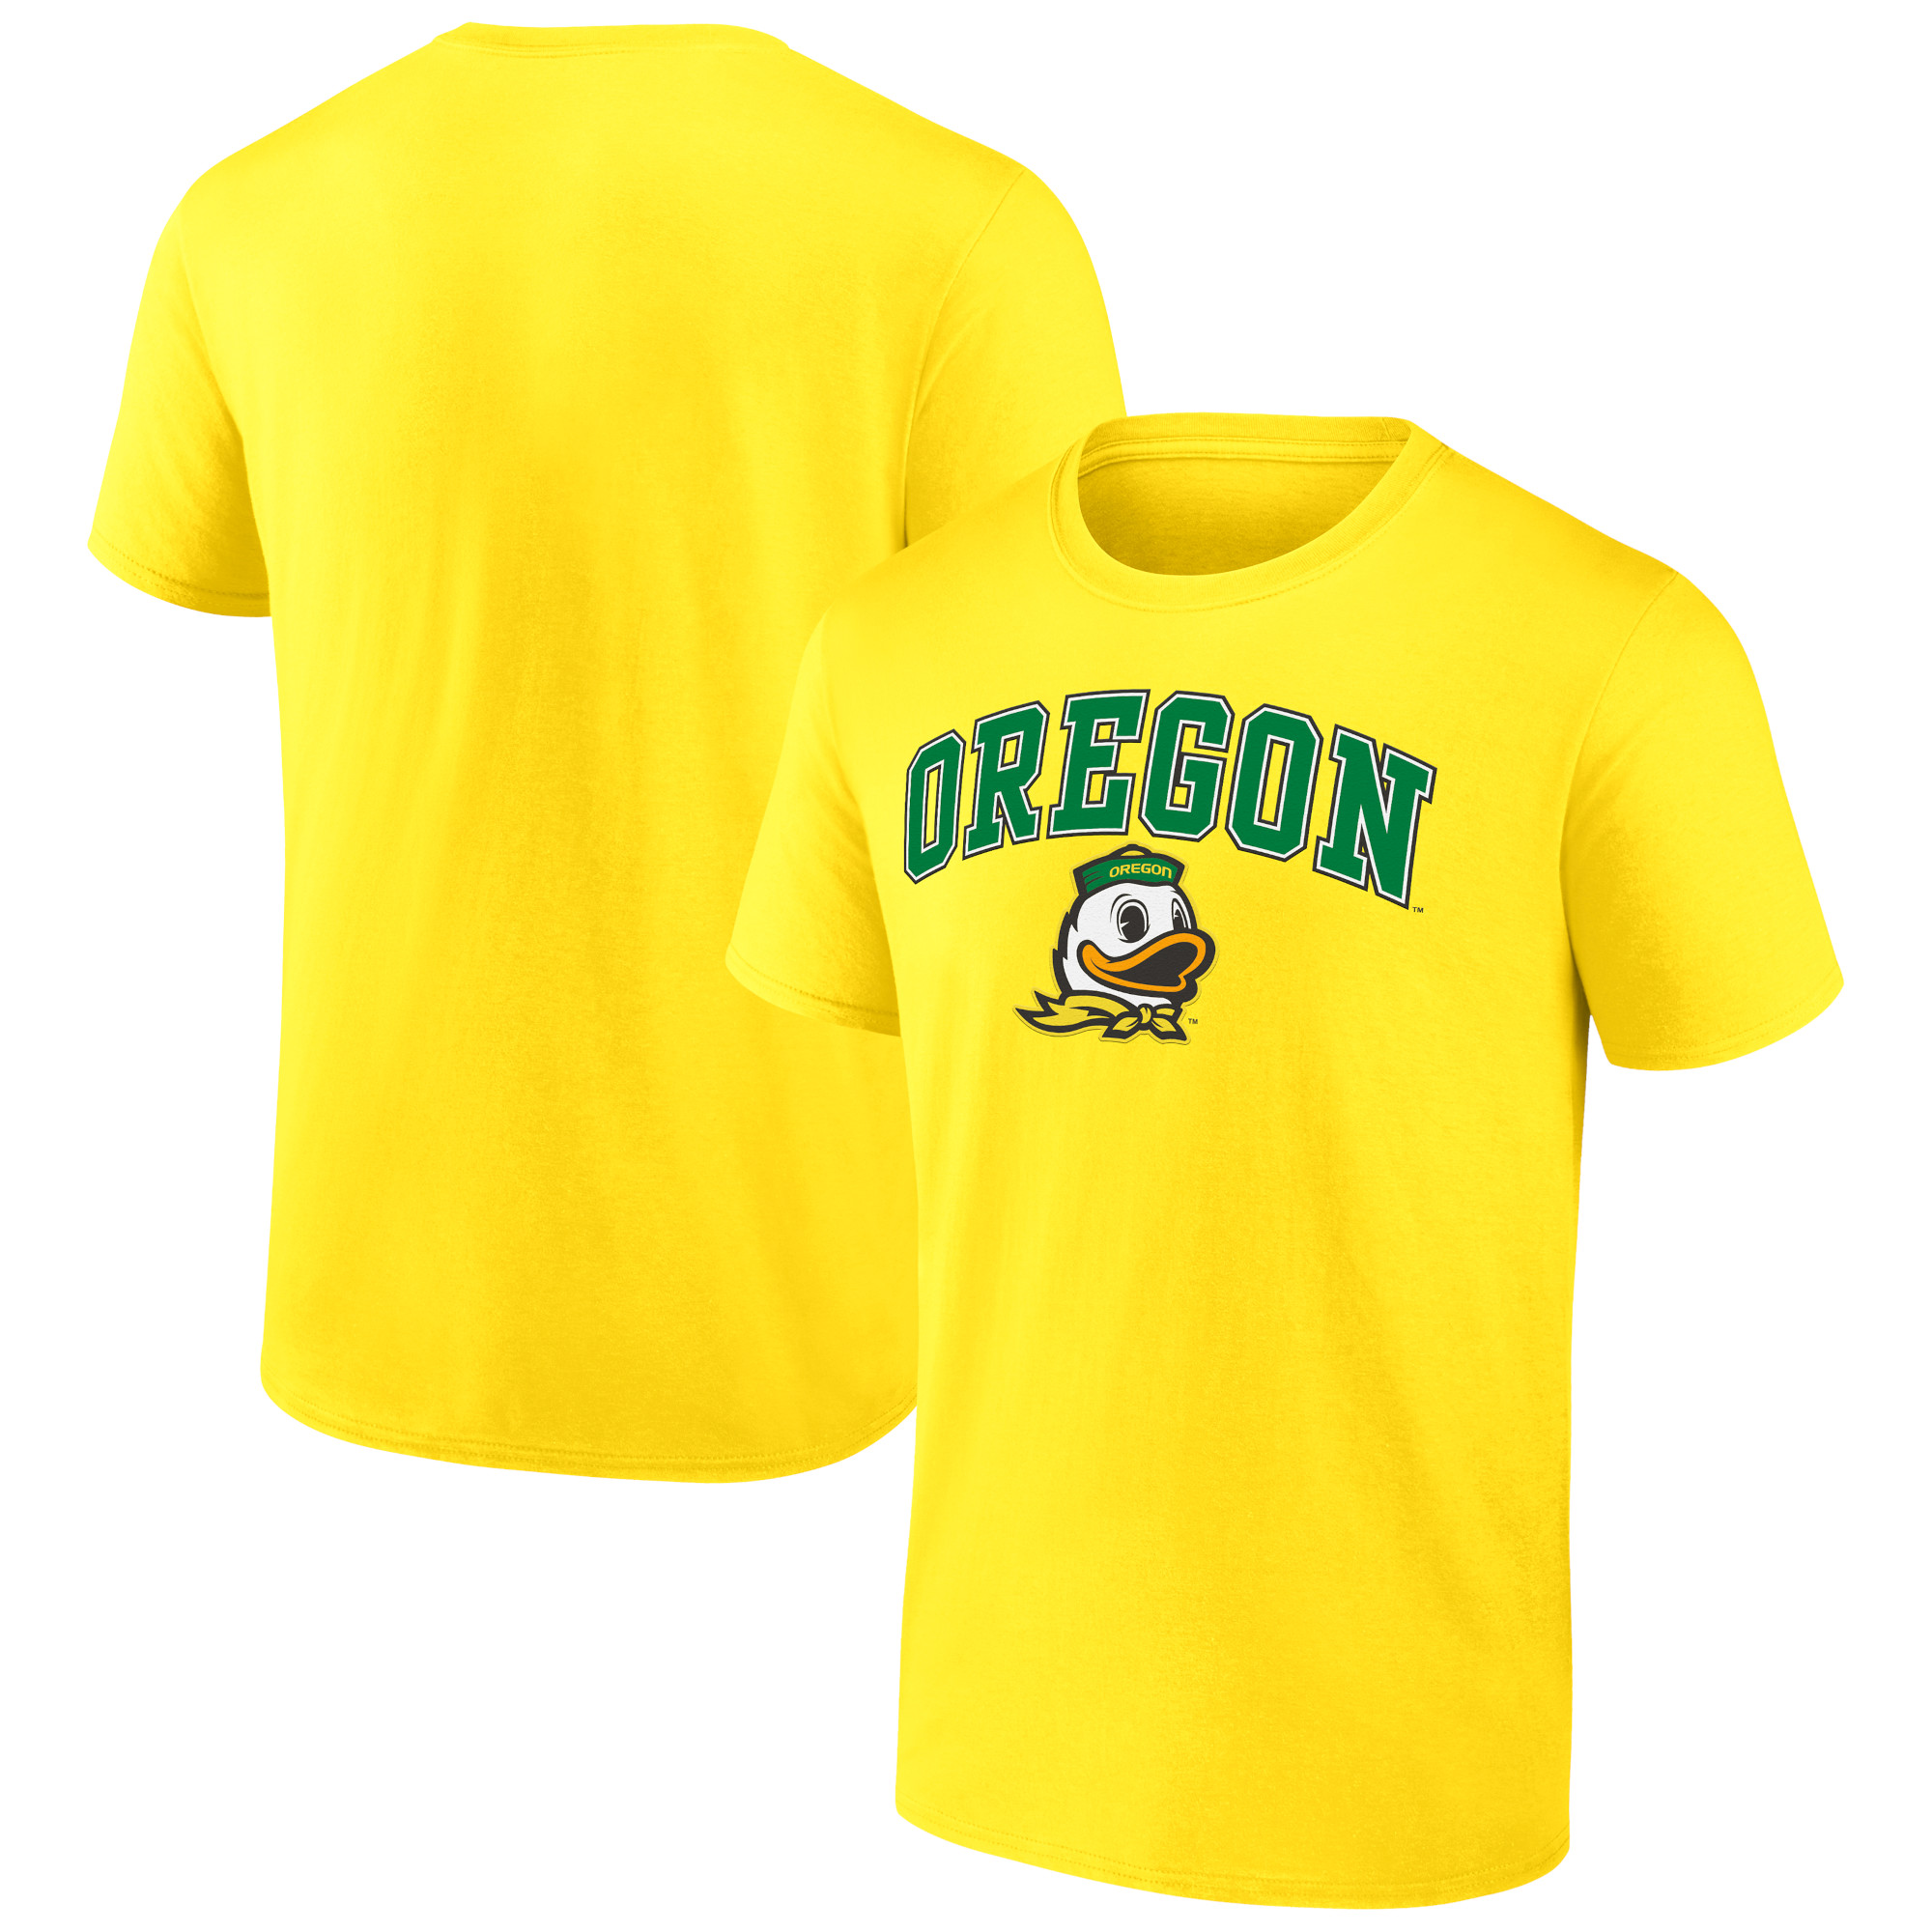 Men's Fanatics Branded Yellow Oregon Ducks Campus T-Shirt - image 1 of 3